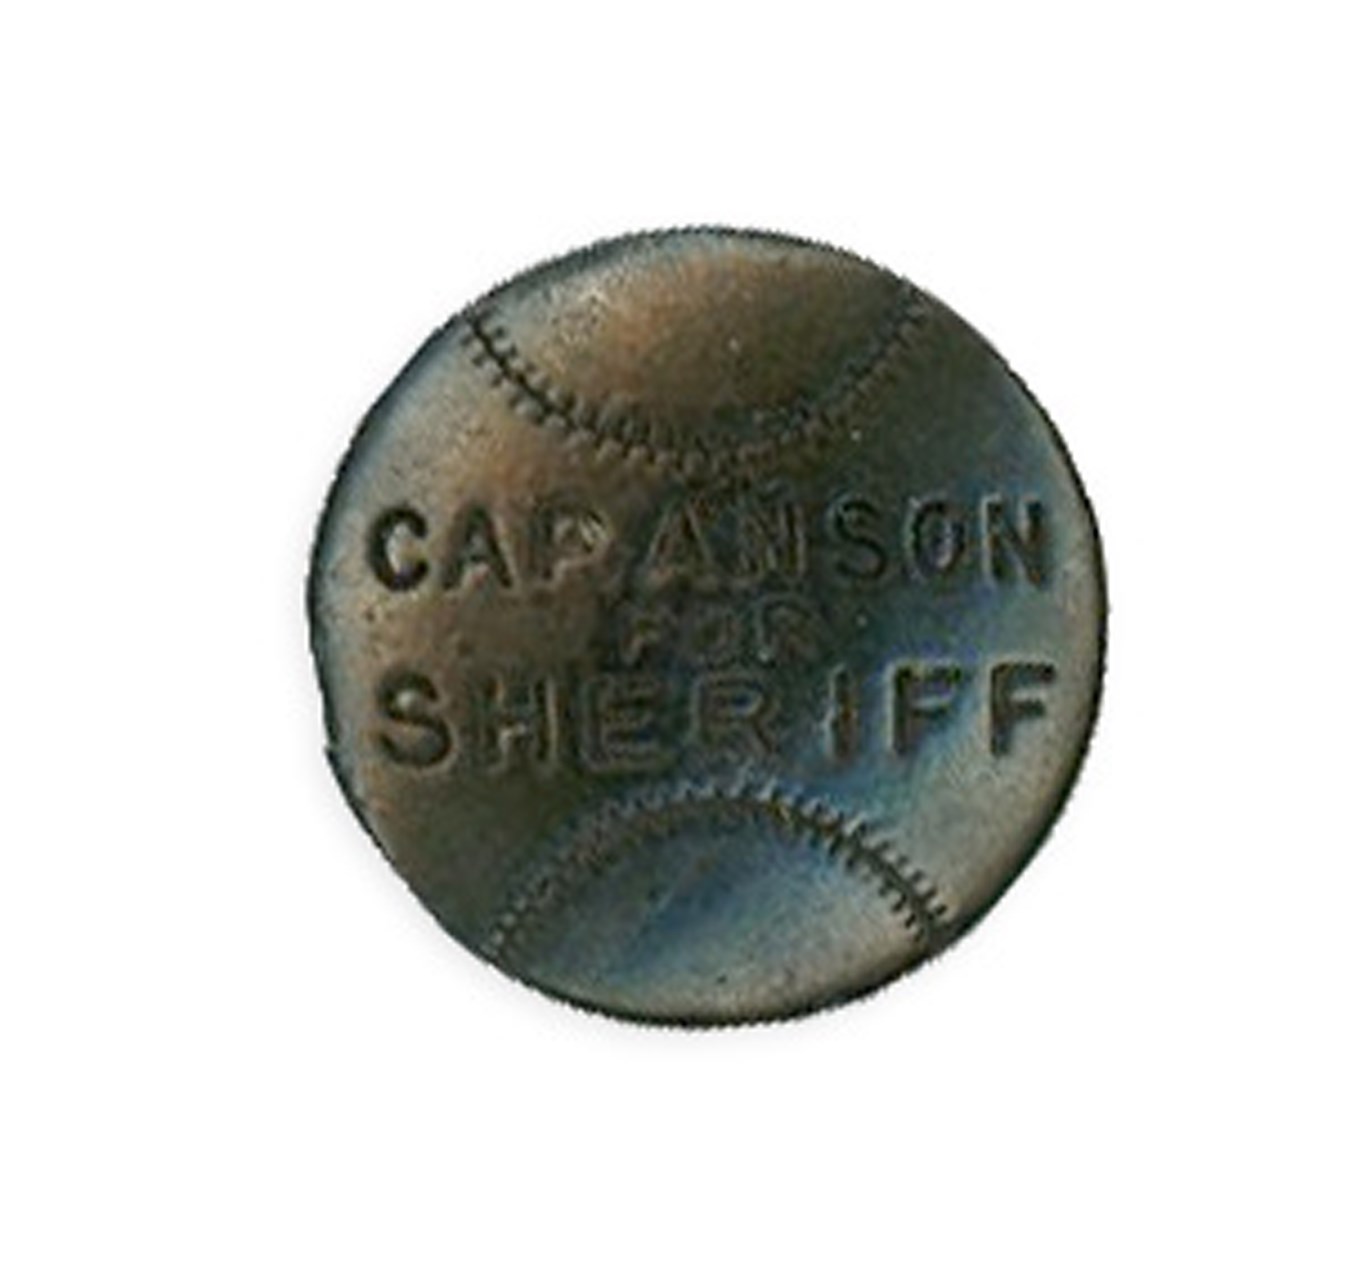 1907 "Cap Anson for Sheriff" Metal Lapel Campaign Stud